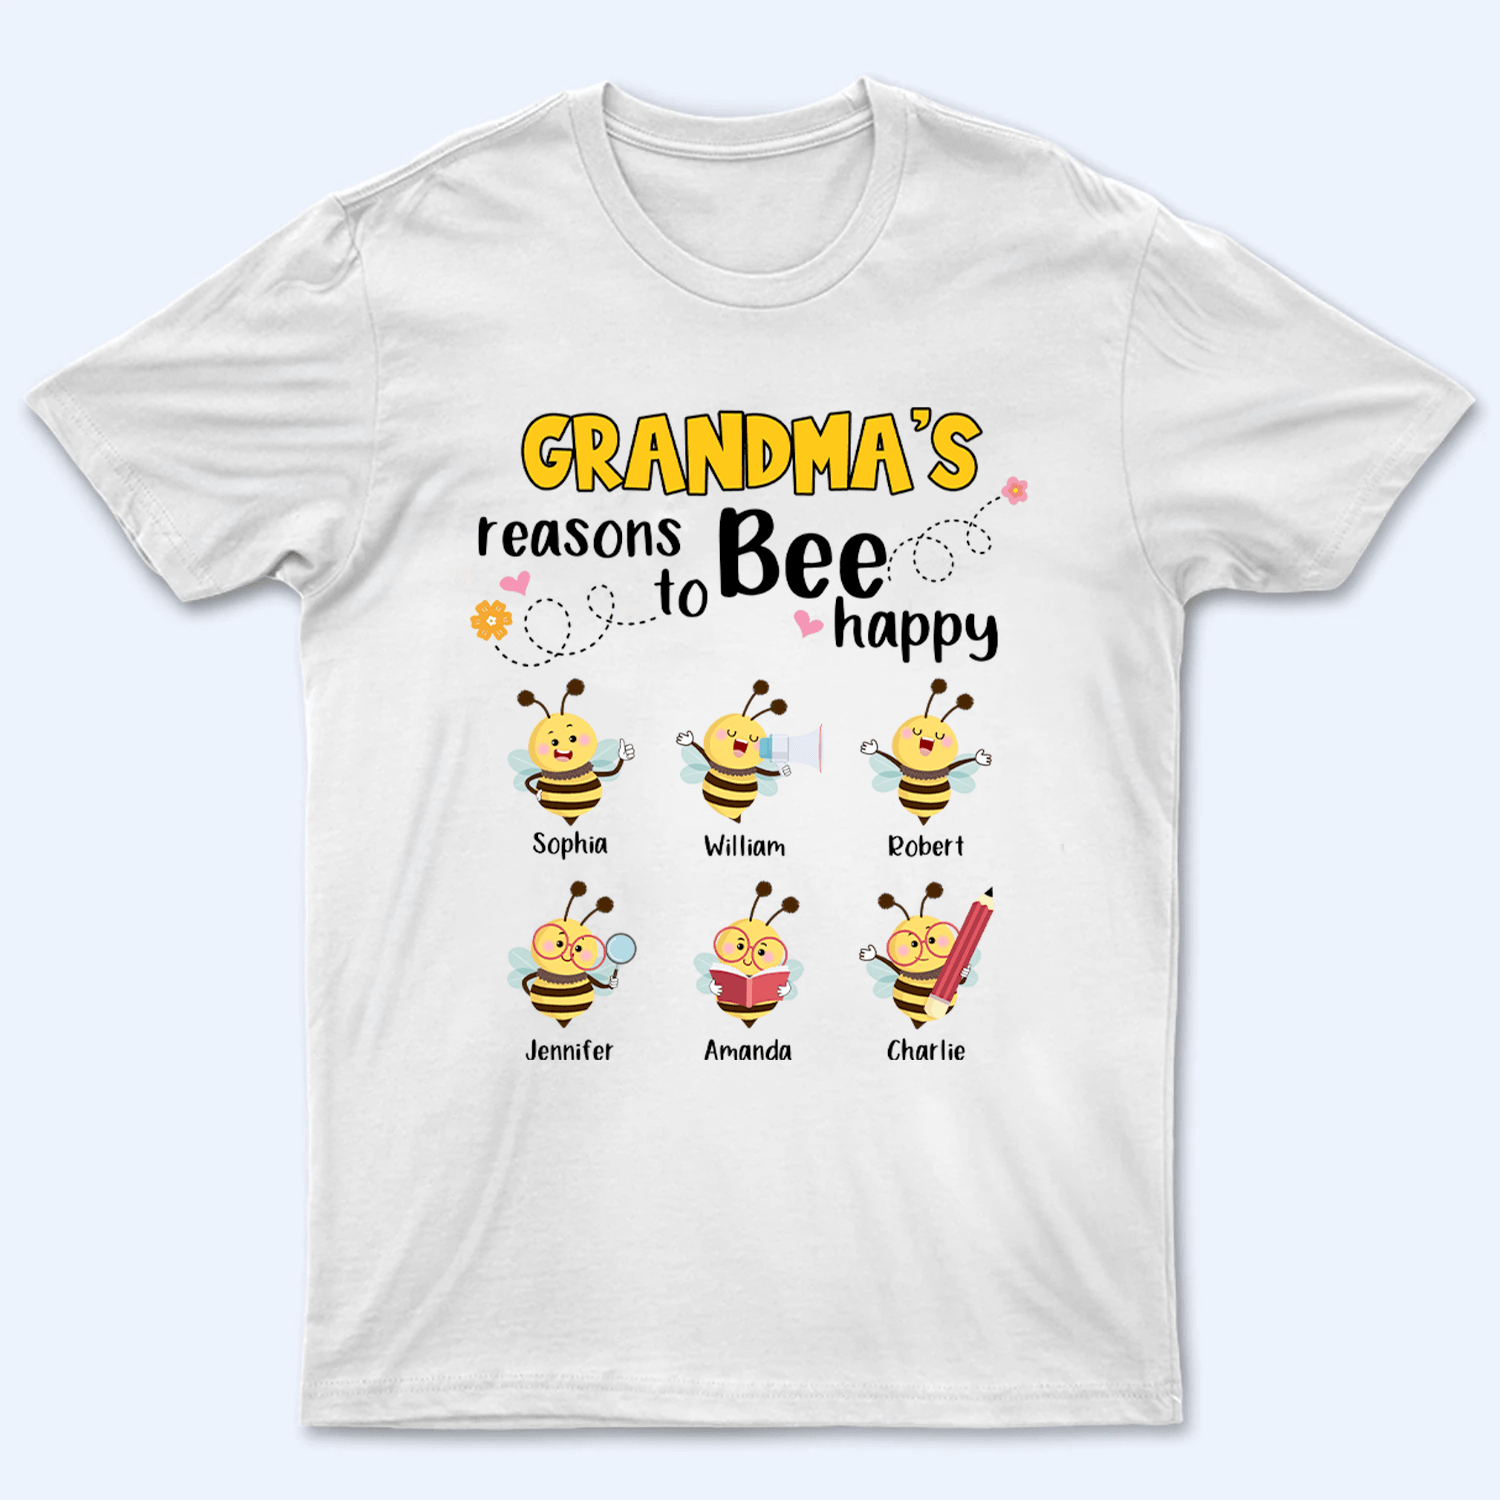 Grandma's Reasons To Bee Happy - Personalized Custom T Shirt - Gift for Grandma/Nana/Mimi, Mom, Wife, Grandparent